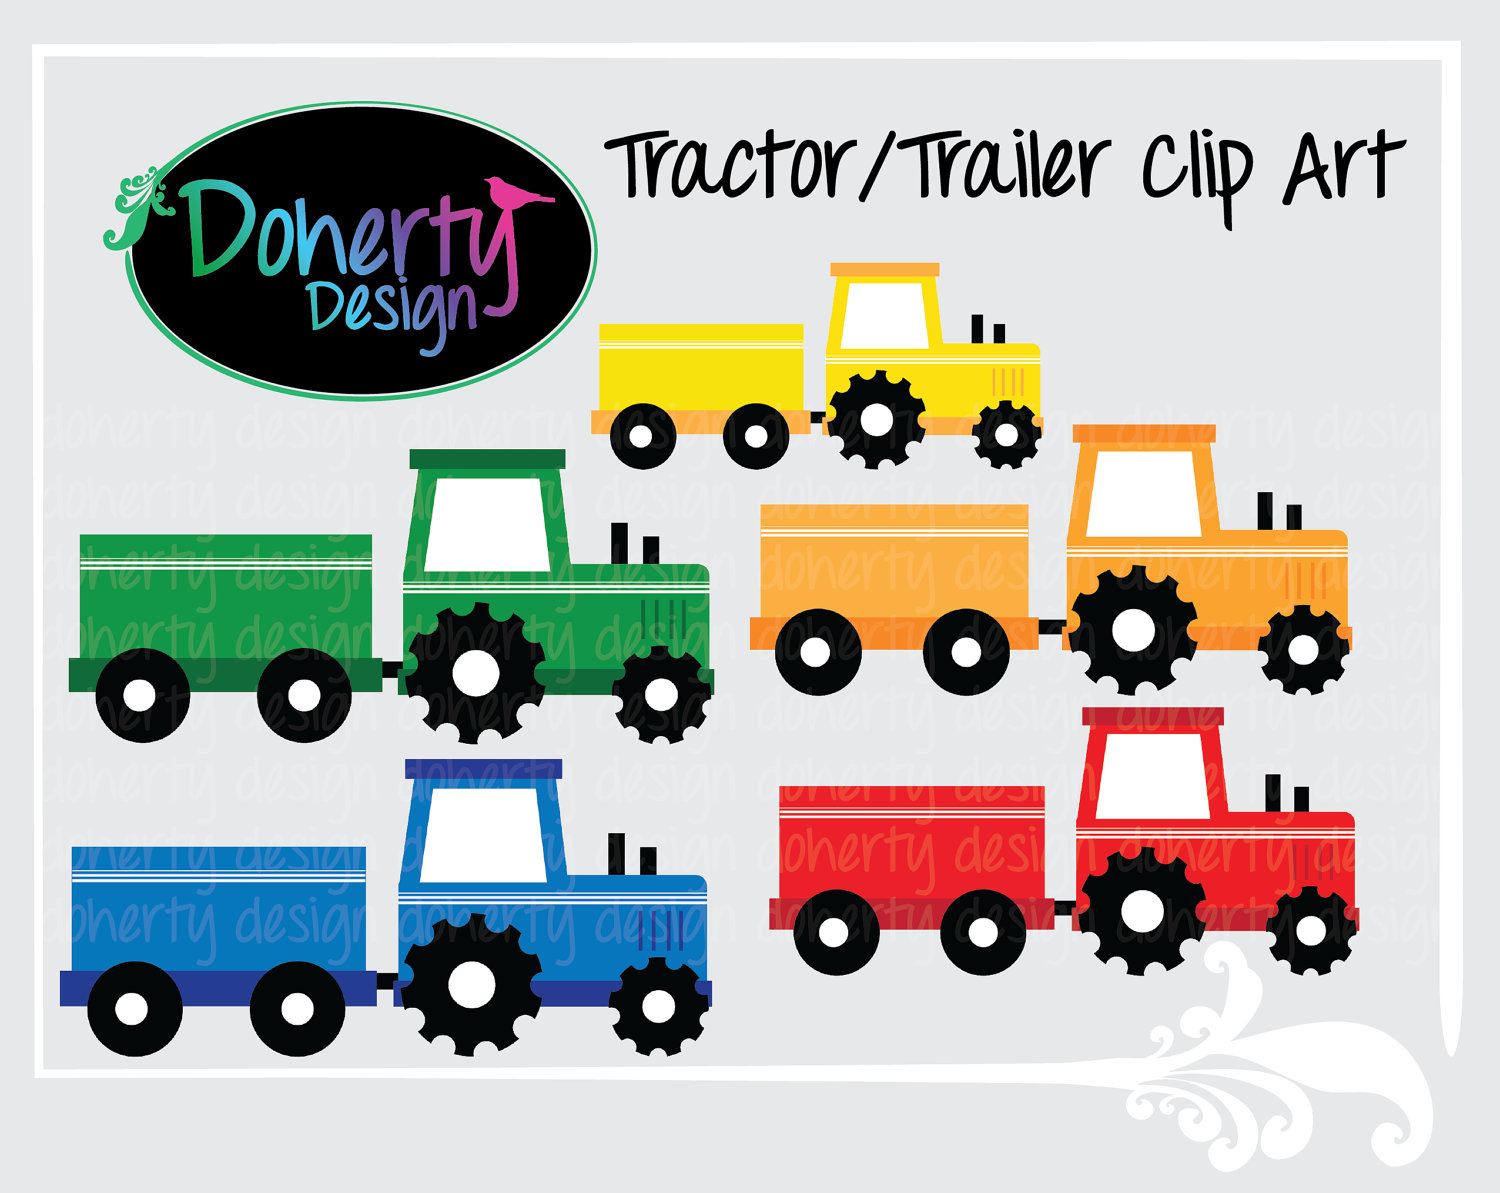 Tractor/Trailer Clip Art by DohertyDesign 